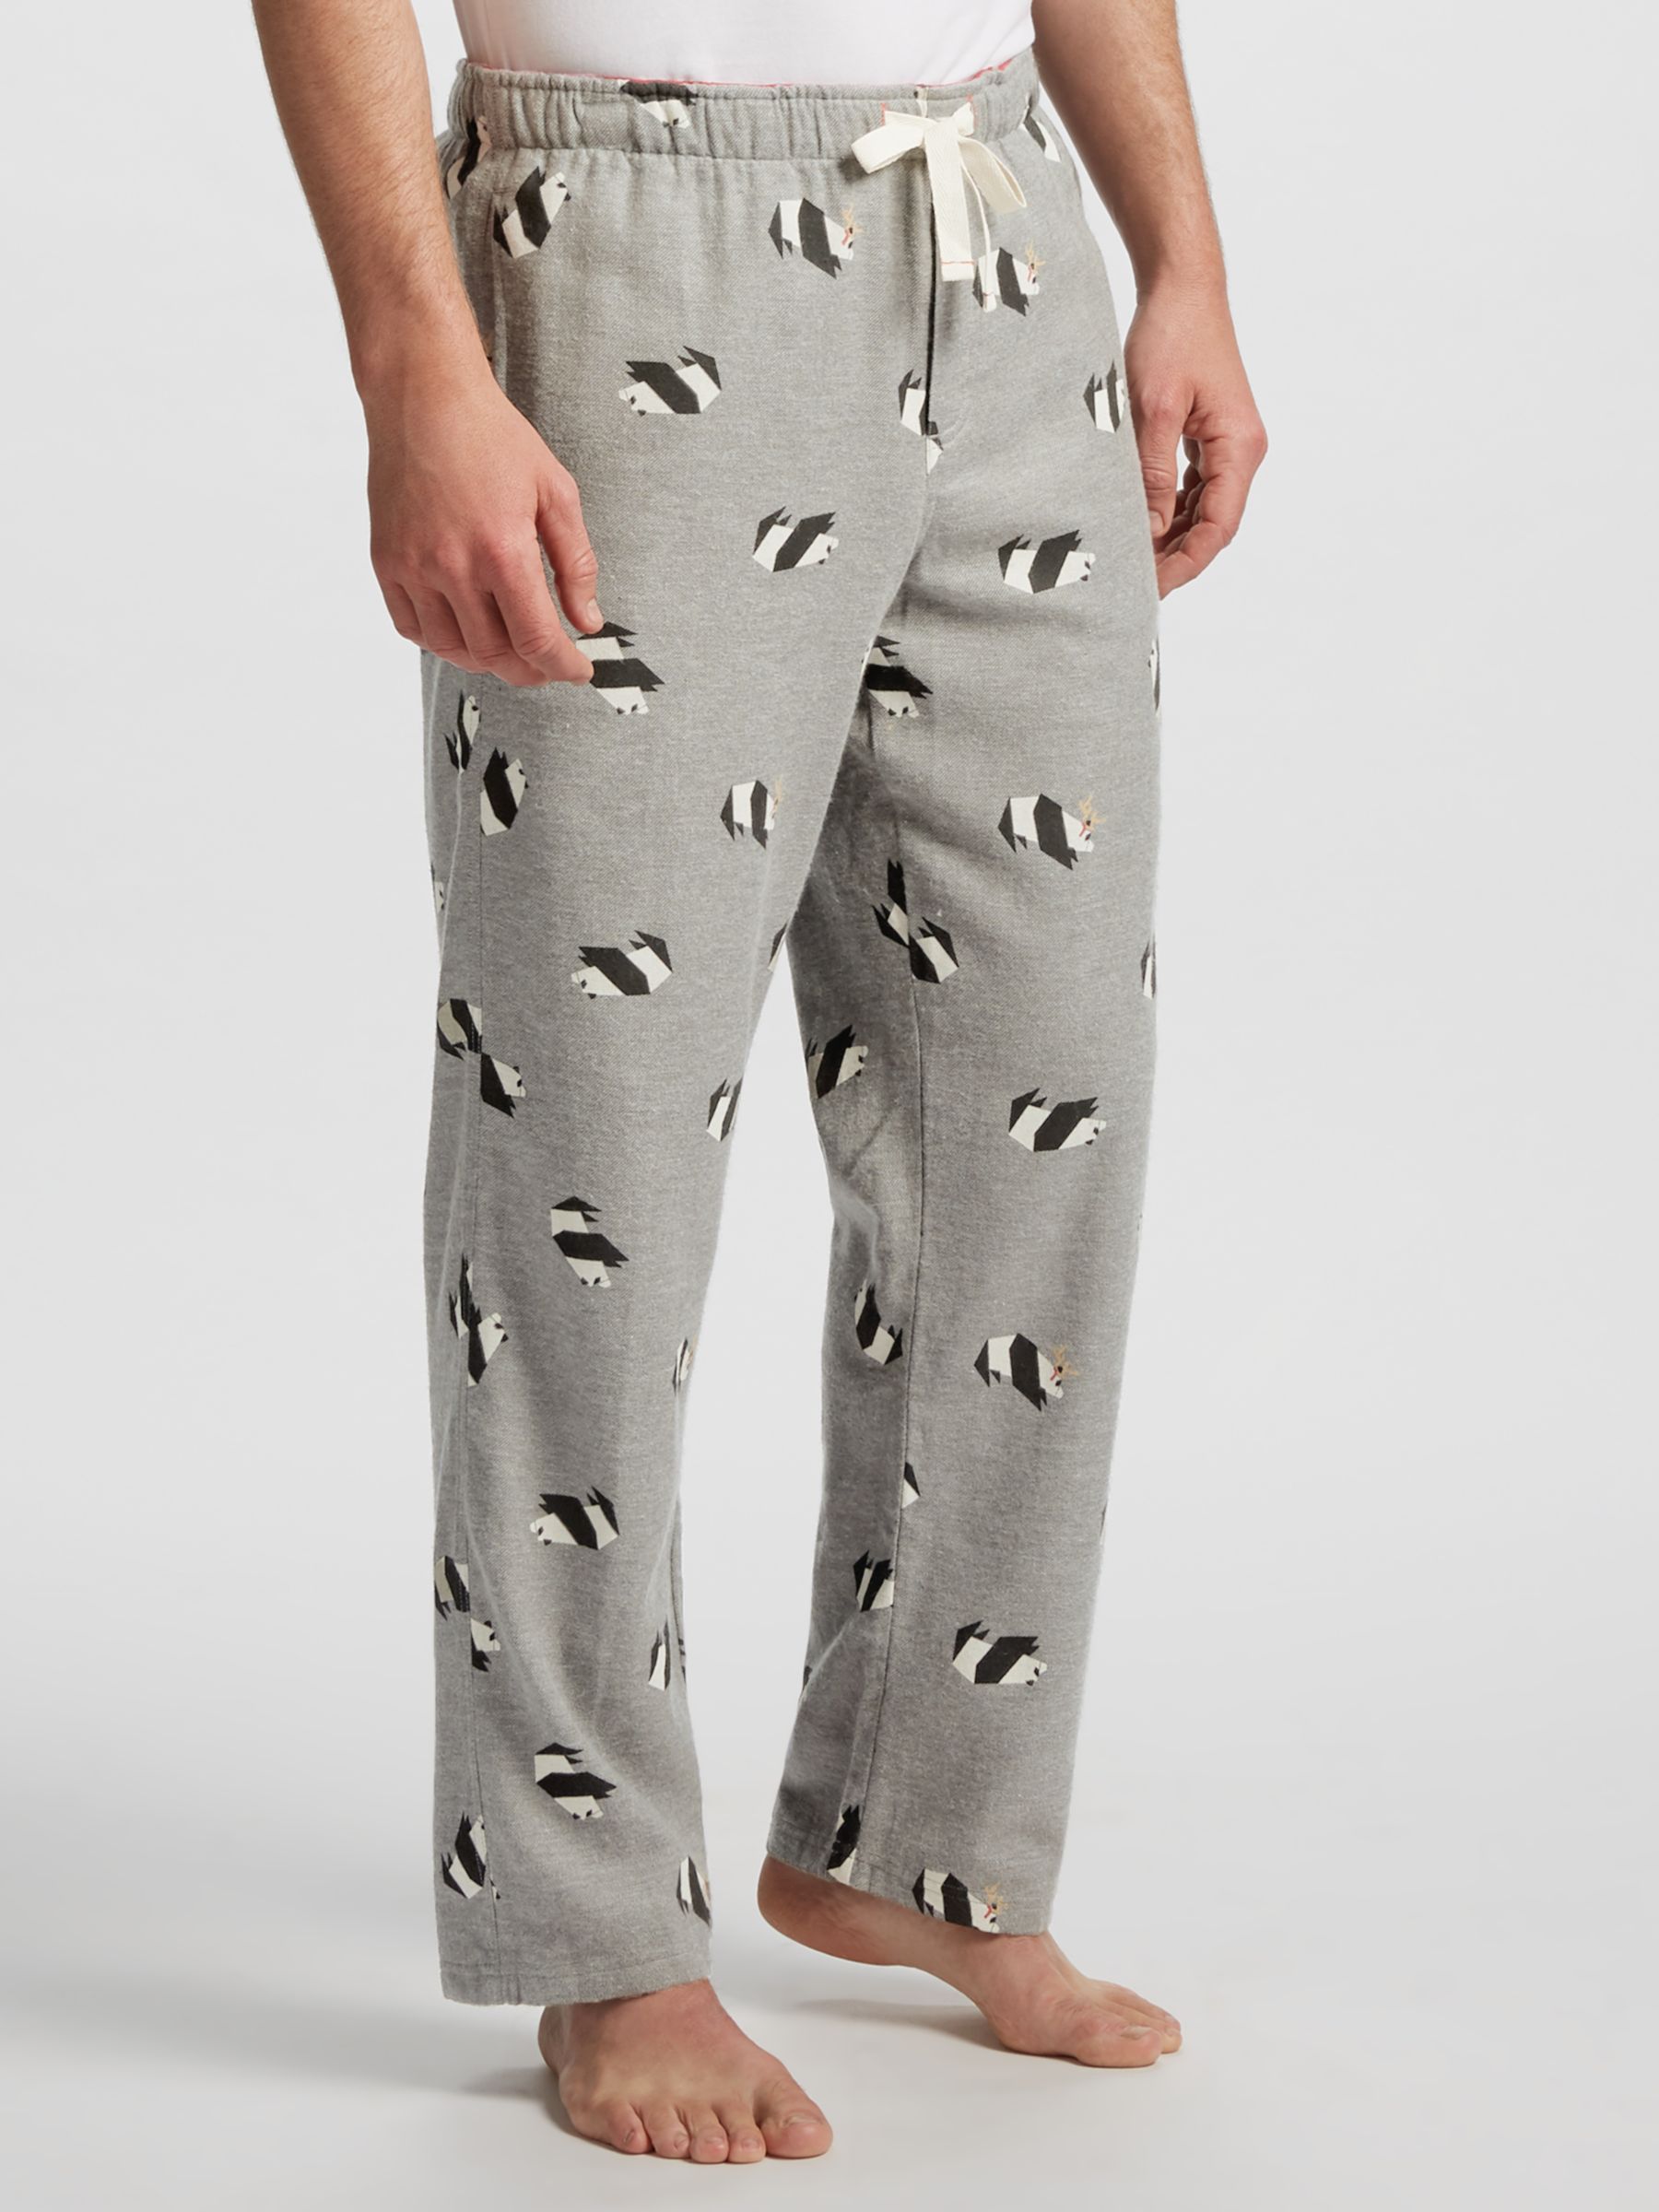 Panda Pyjama Shorts, Loungewear Bottoms, Pj's, Panda Sleepwear